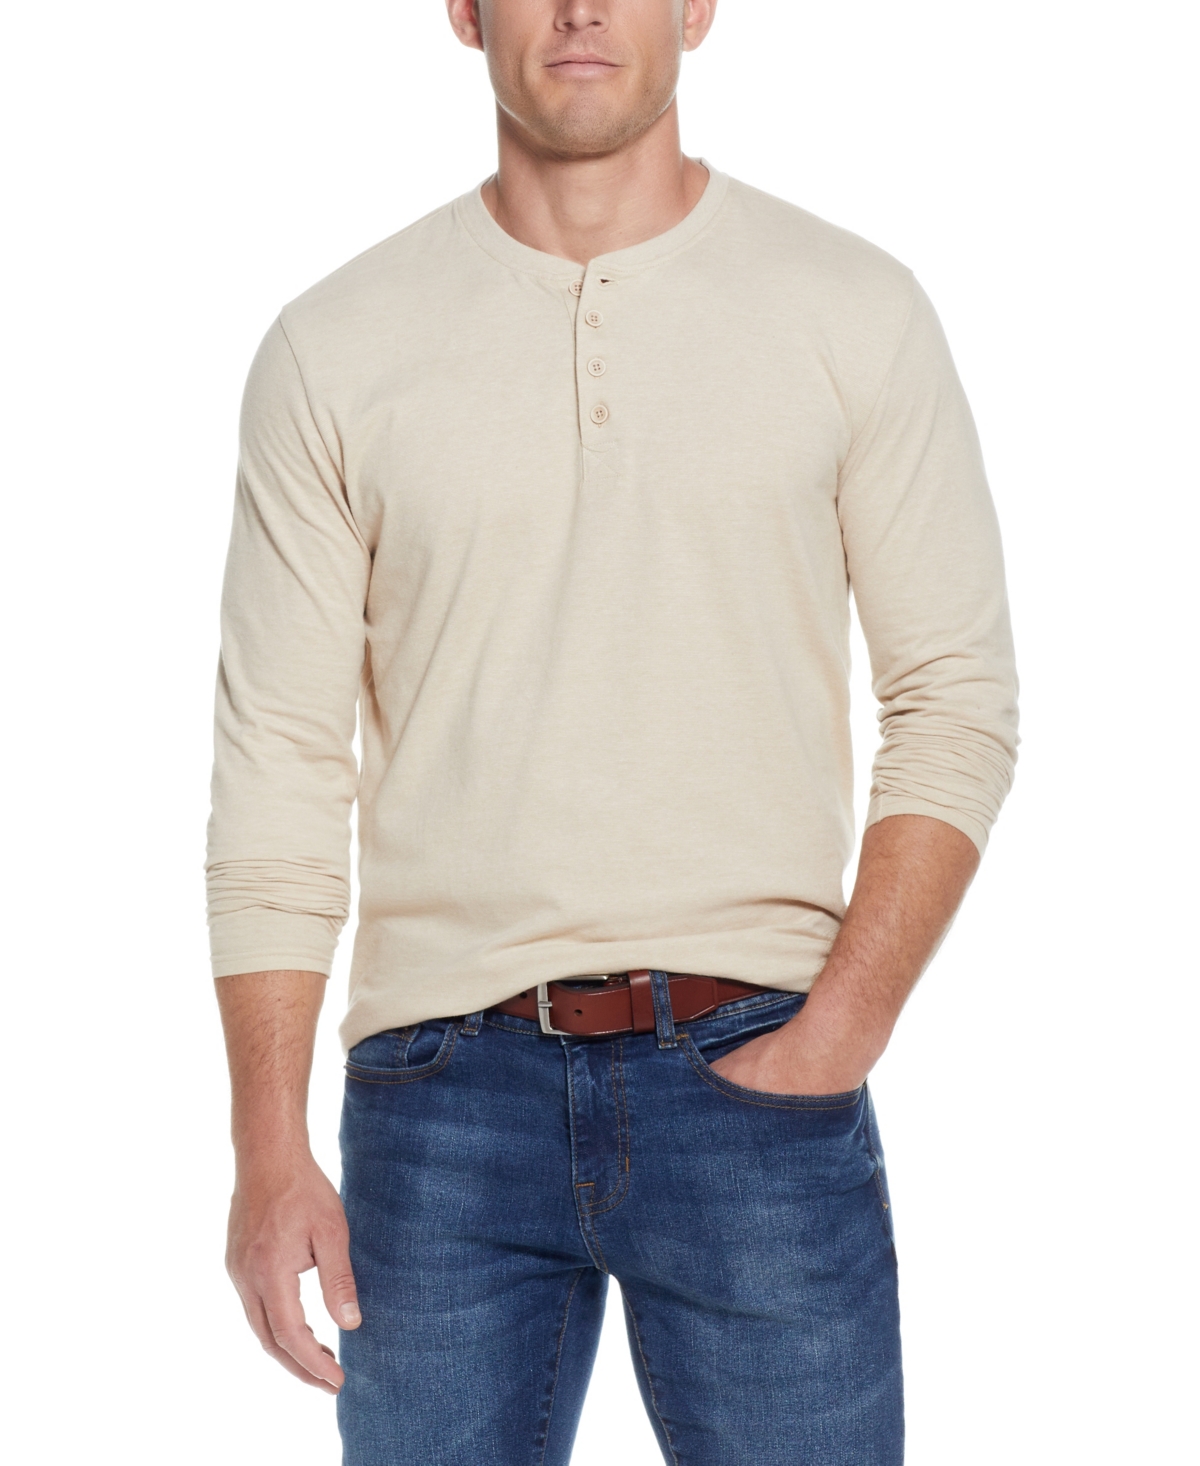 Weatherproof Vintage Men's Long Sleeve Sueded Microstripe Henley T-shirt In Natural